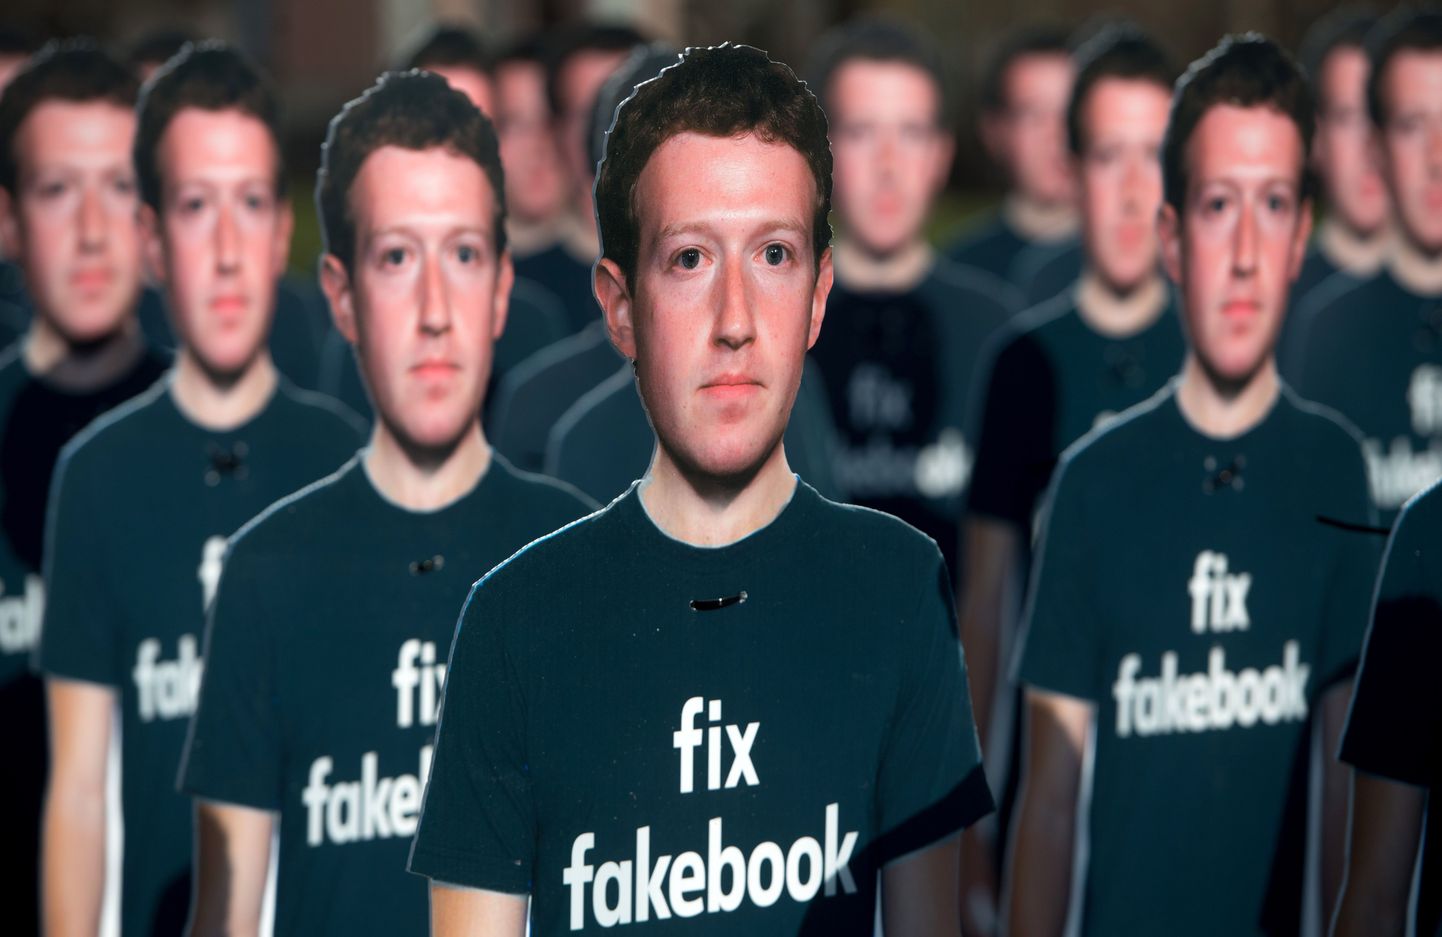 100 Facebooki asutaja Mark Zuckerberg maketti Washingtonis Capitooliumi ees selle aasta aprillis.